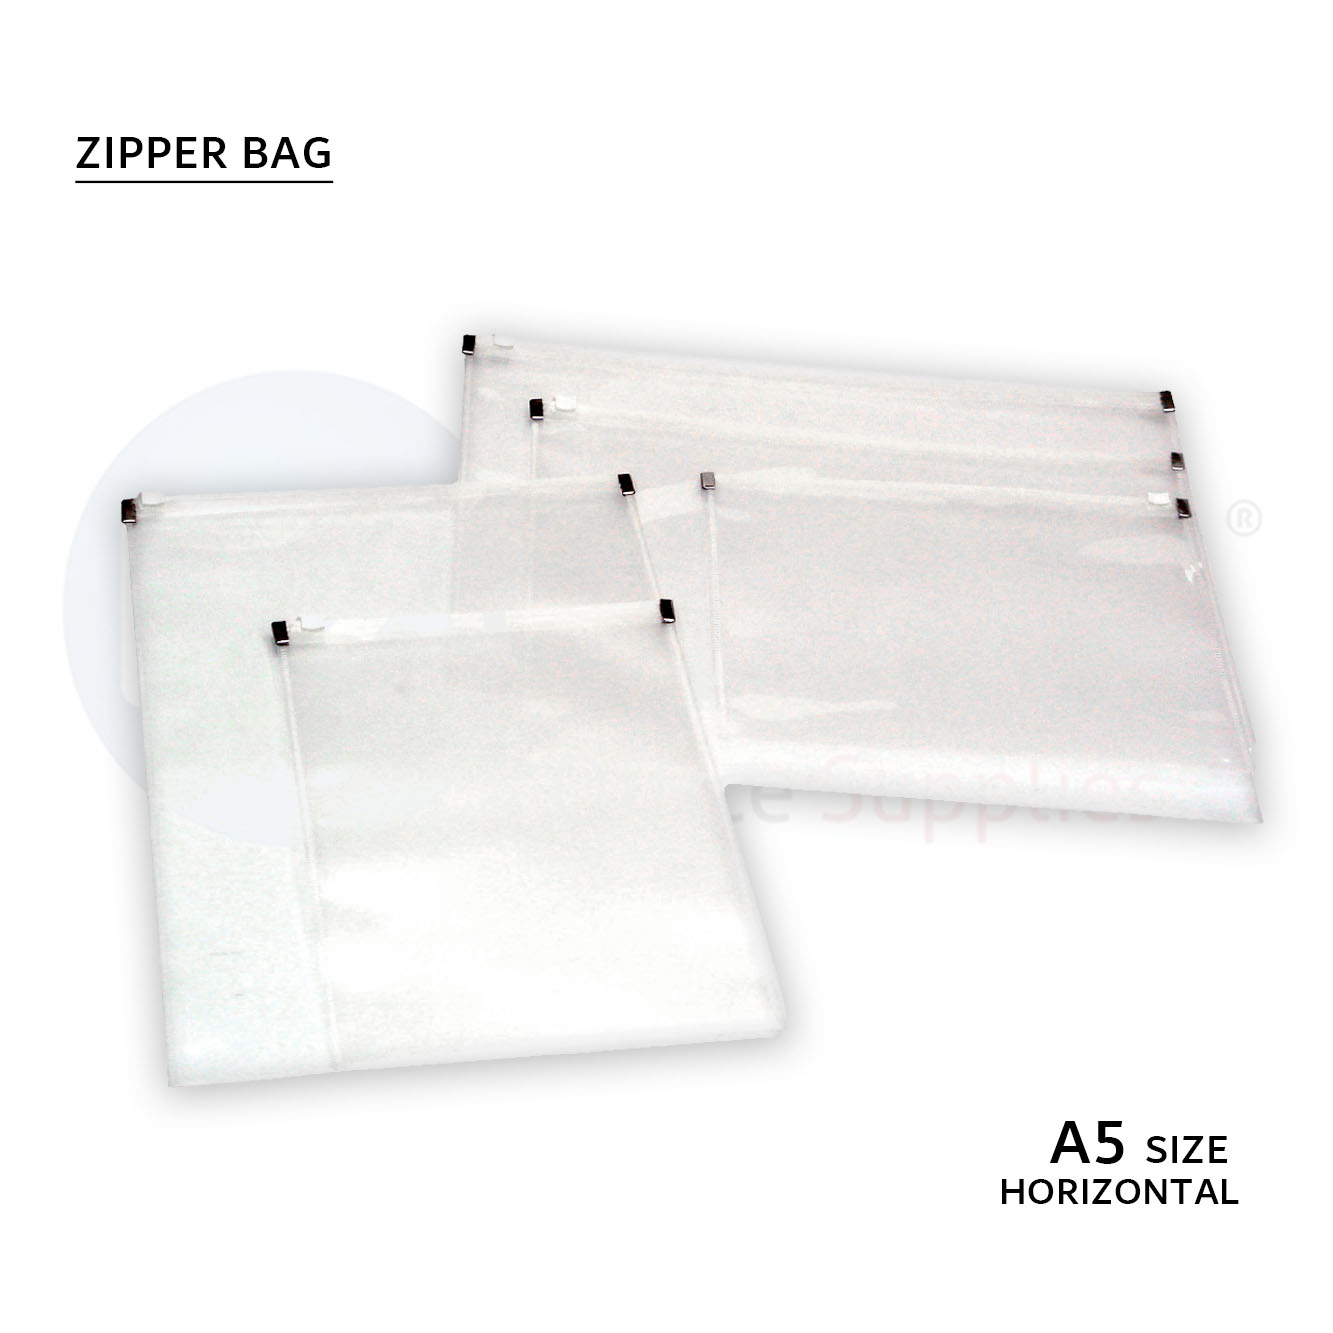 Zipper bag,Horizontal, A5 size